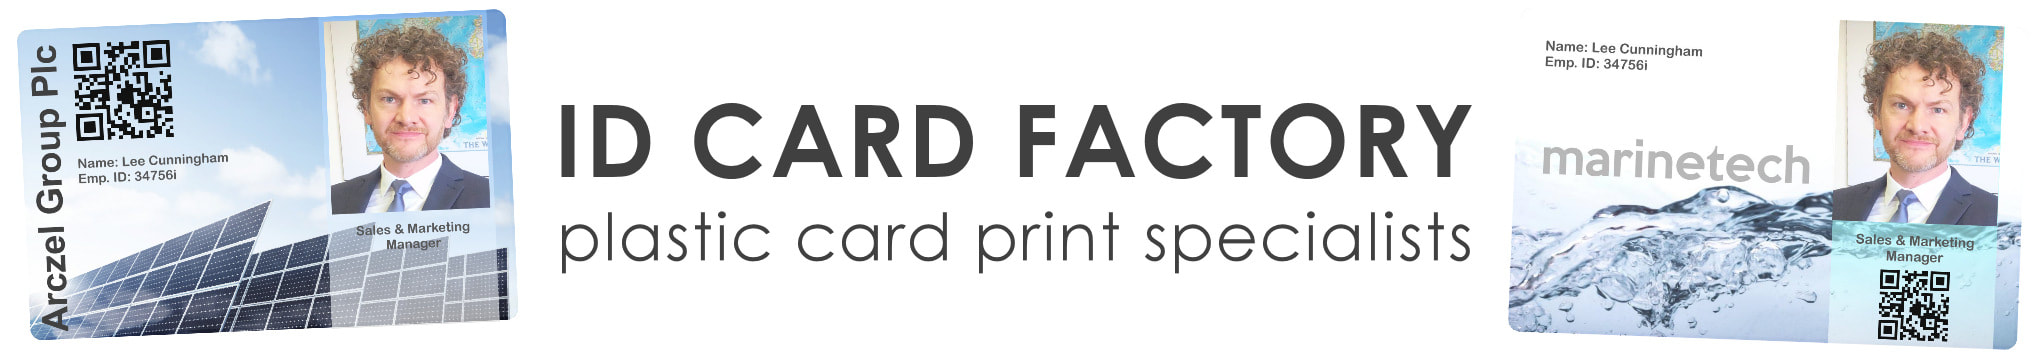 Birkenhead ID card printing | staff photo ID cards | company employee ID card print service | Local Identity Card Printing | Custom Design 